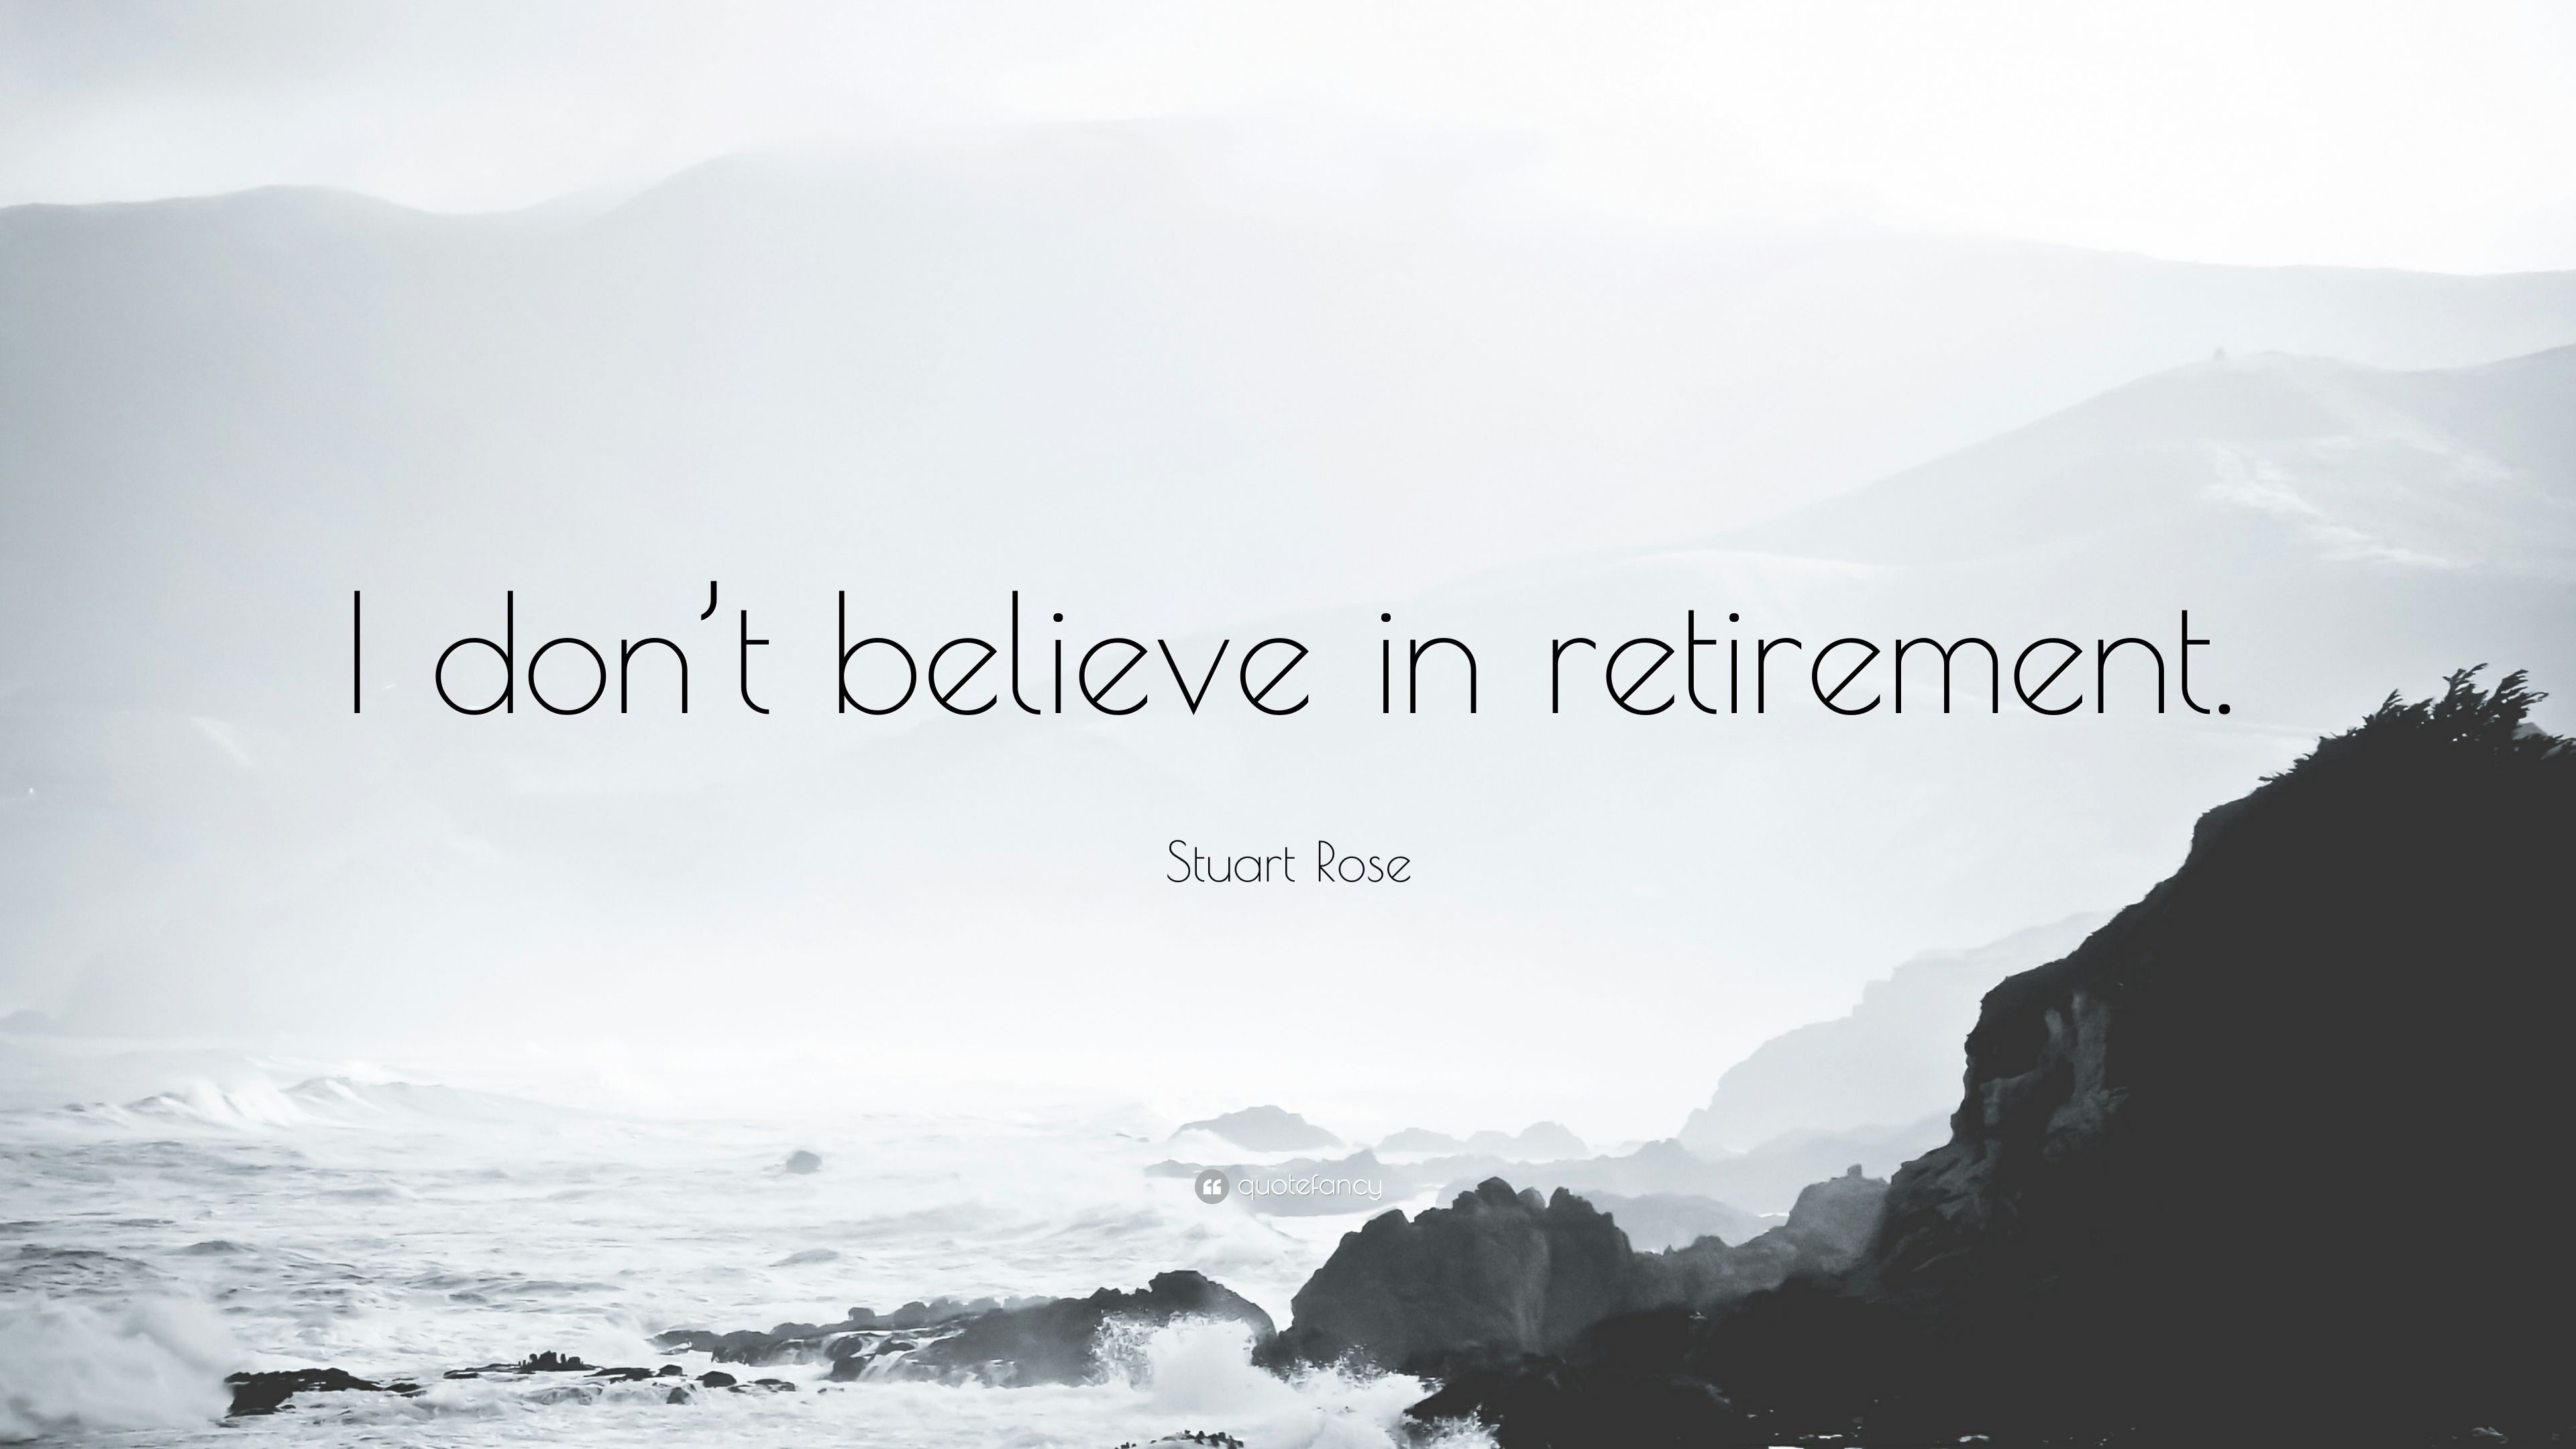 Stuart Rose Quote: “I don't believe in retirement.” 7 wallpaper